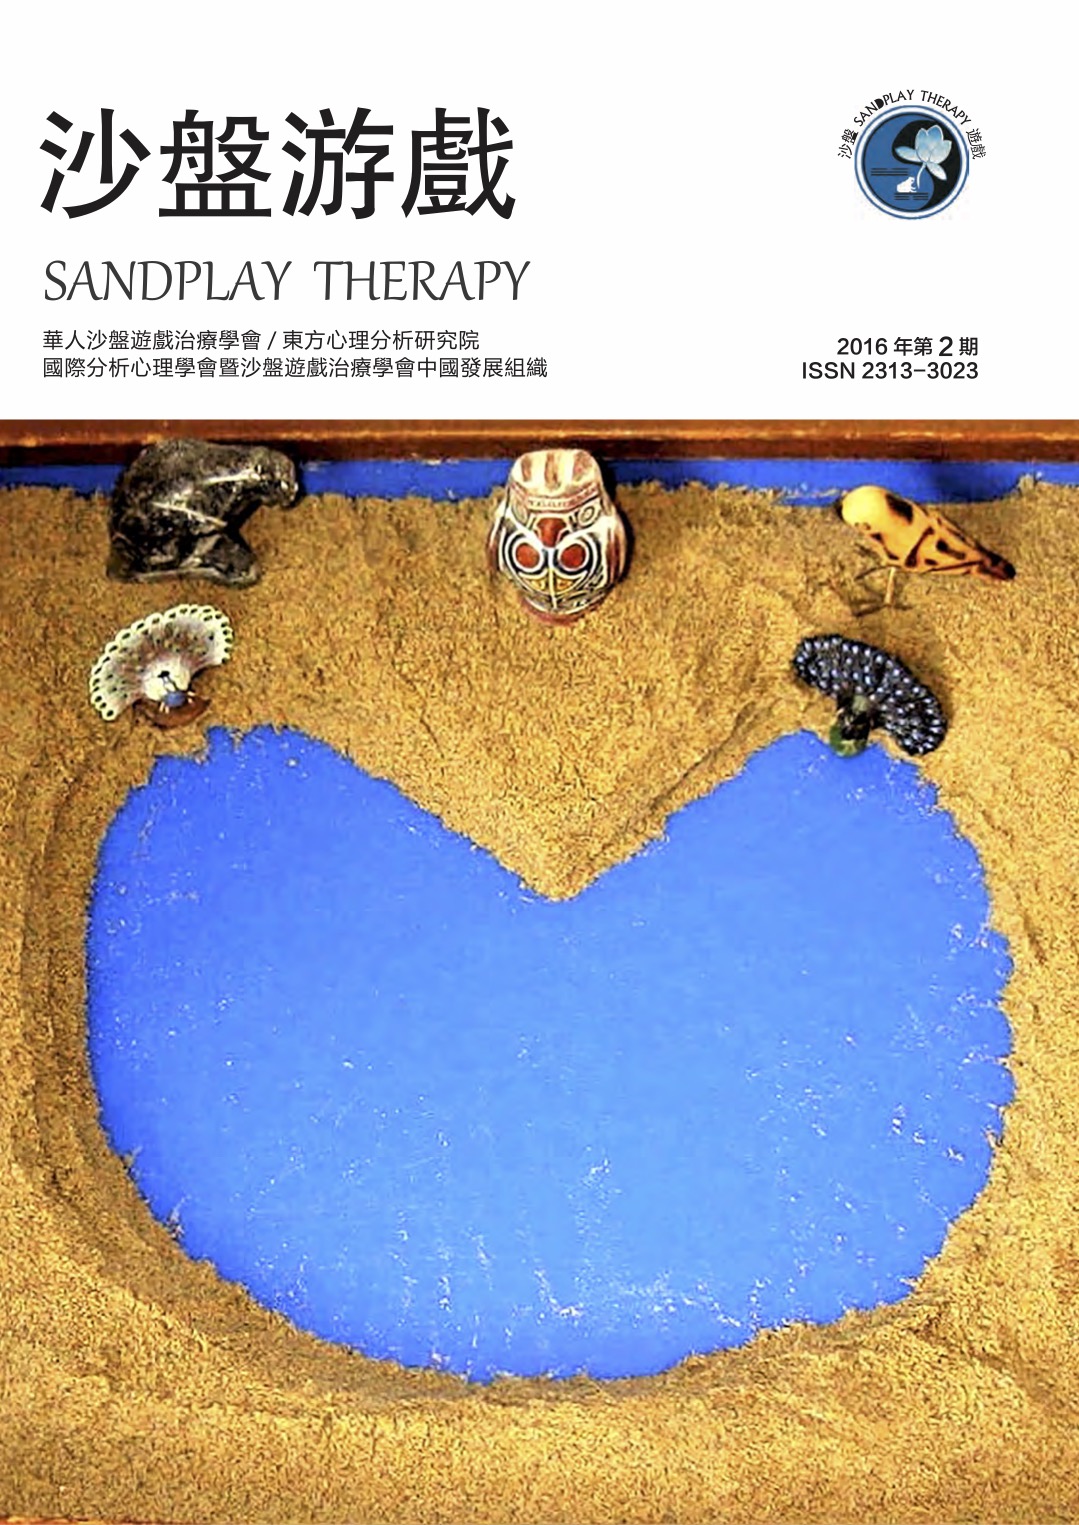 SANDPLAY THERAPY, No.2 (2016)